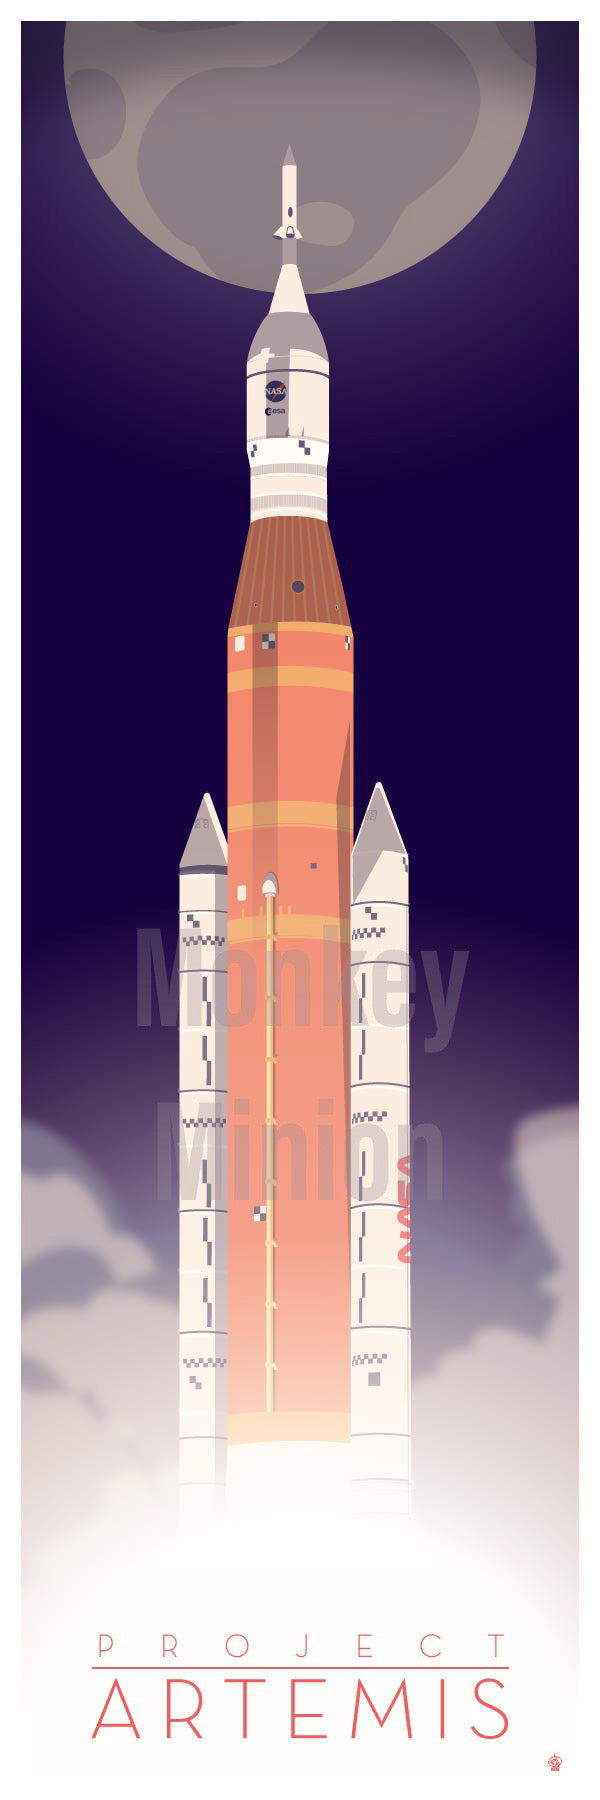 Project Artemis SLS Space Launch System 12x36 POPaganda print